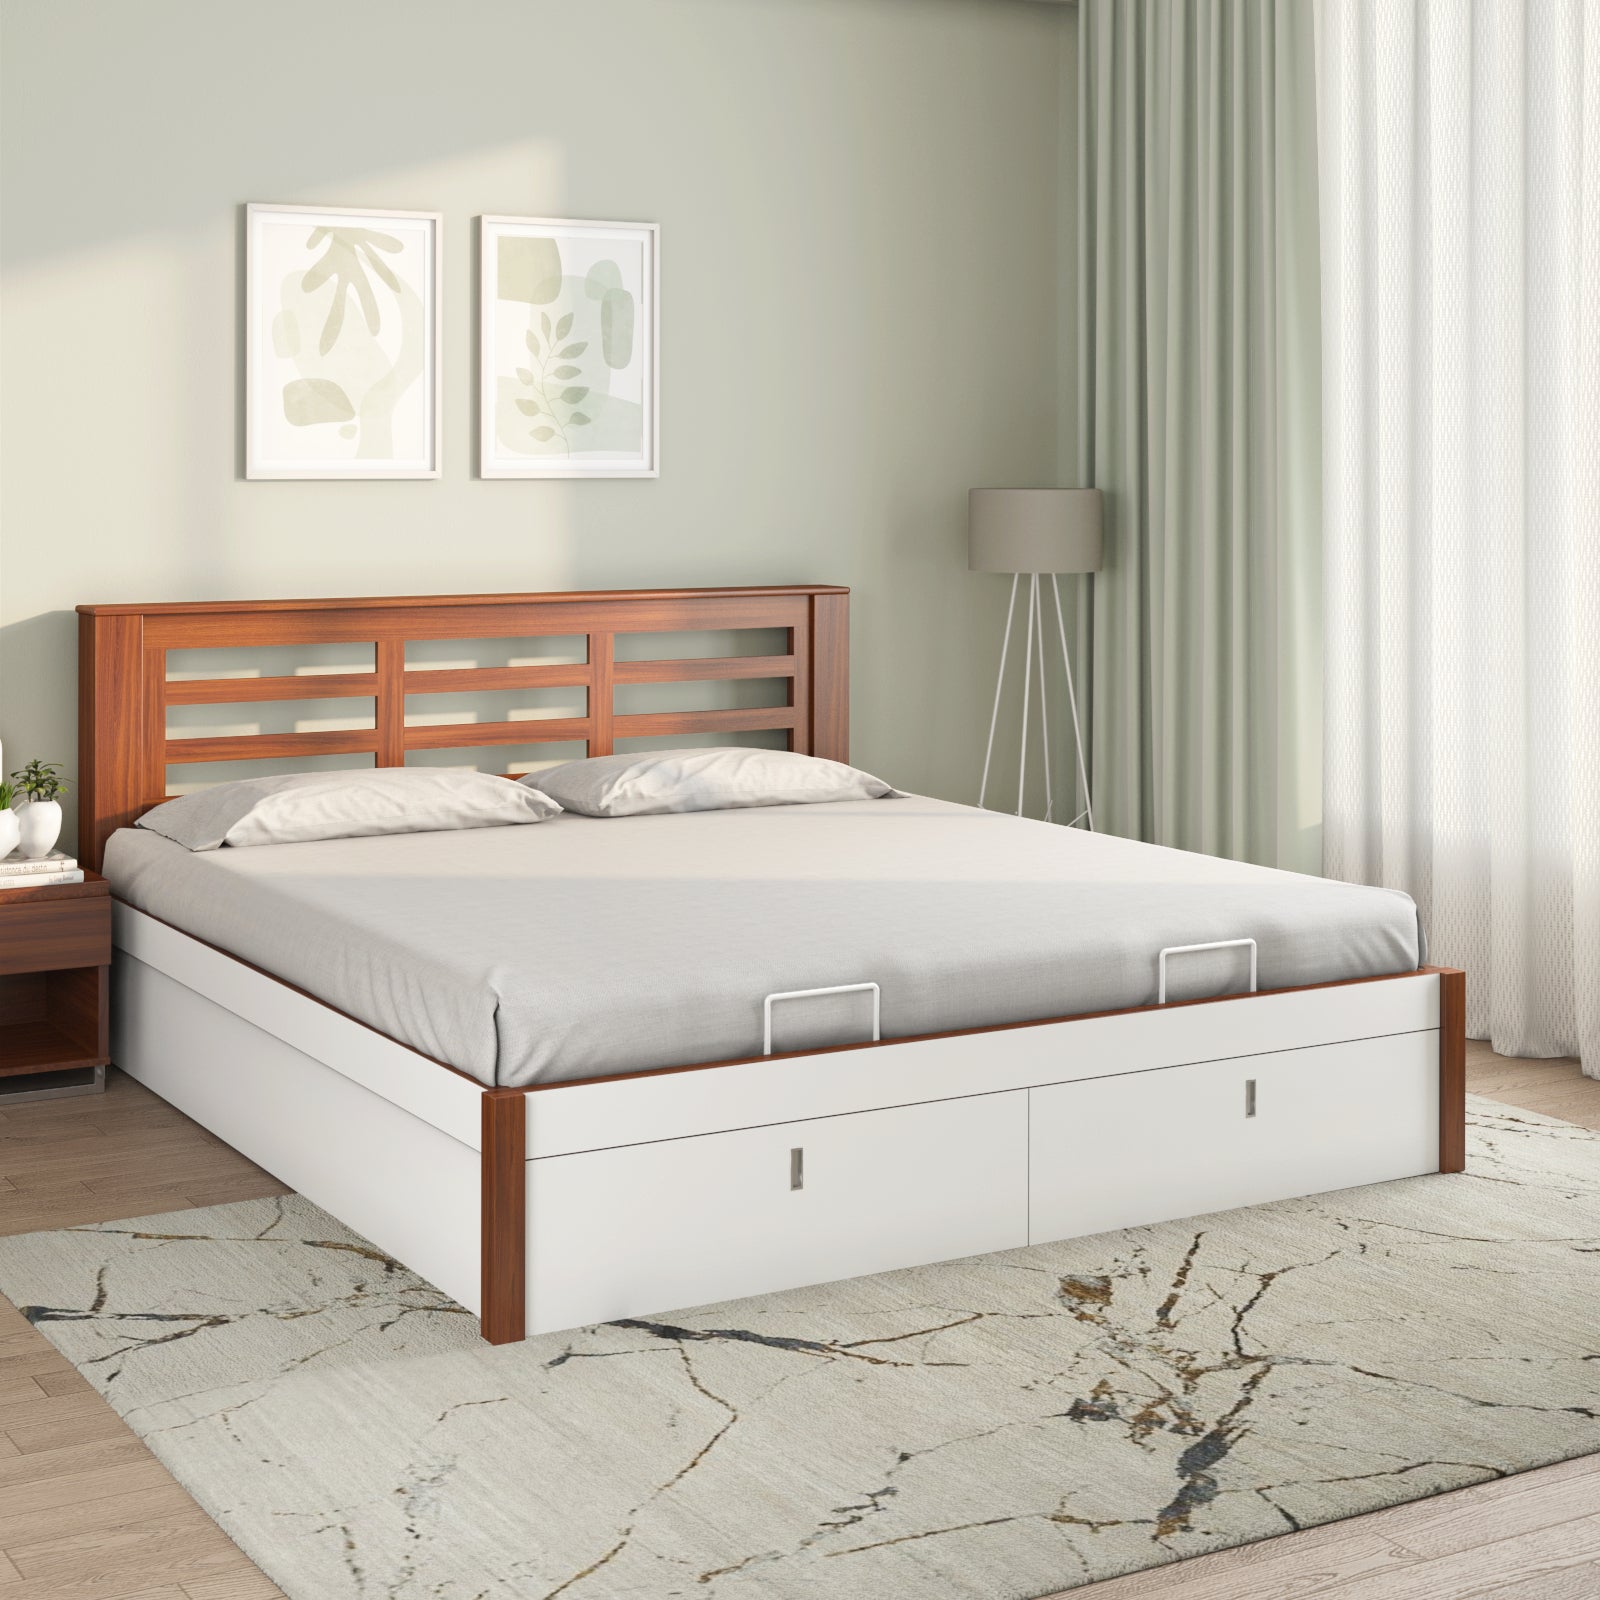 Maple Premier Bed with Hydraulic Storage (White)